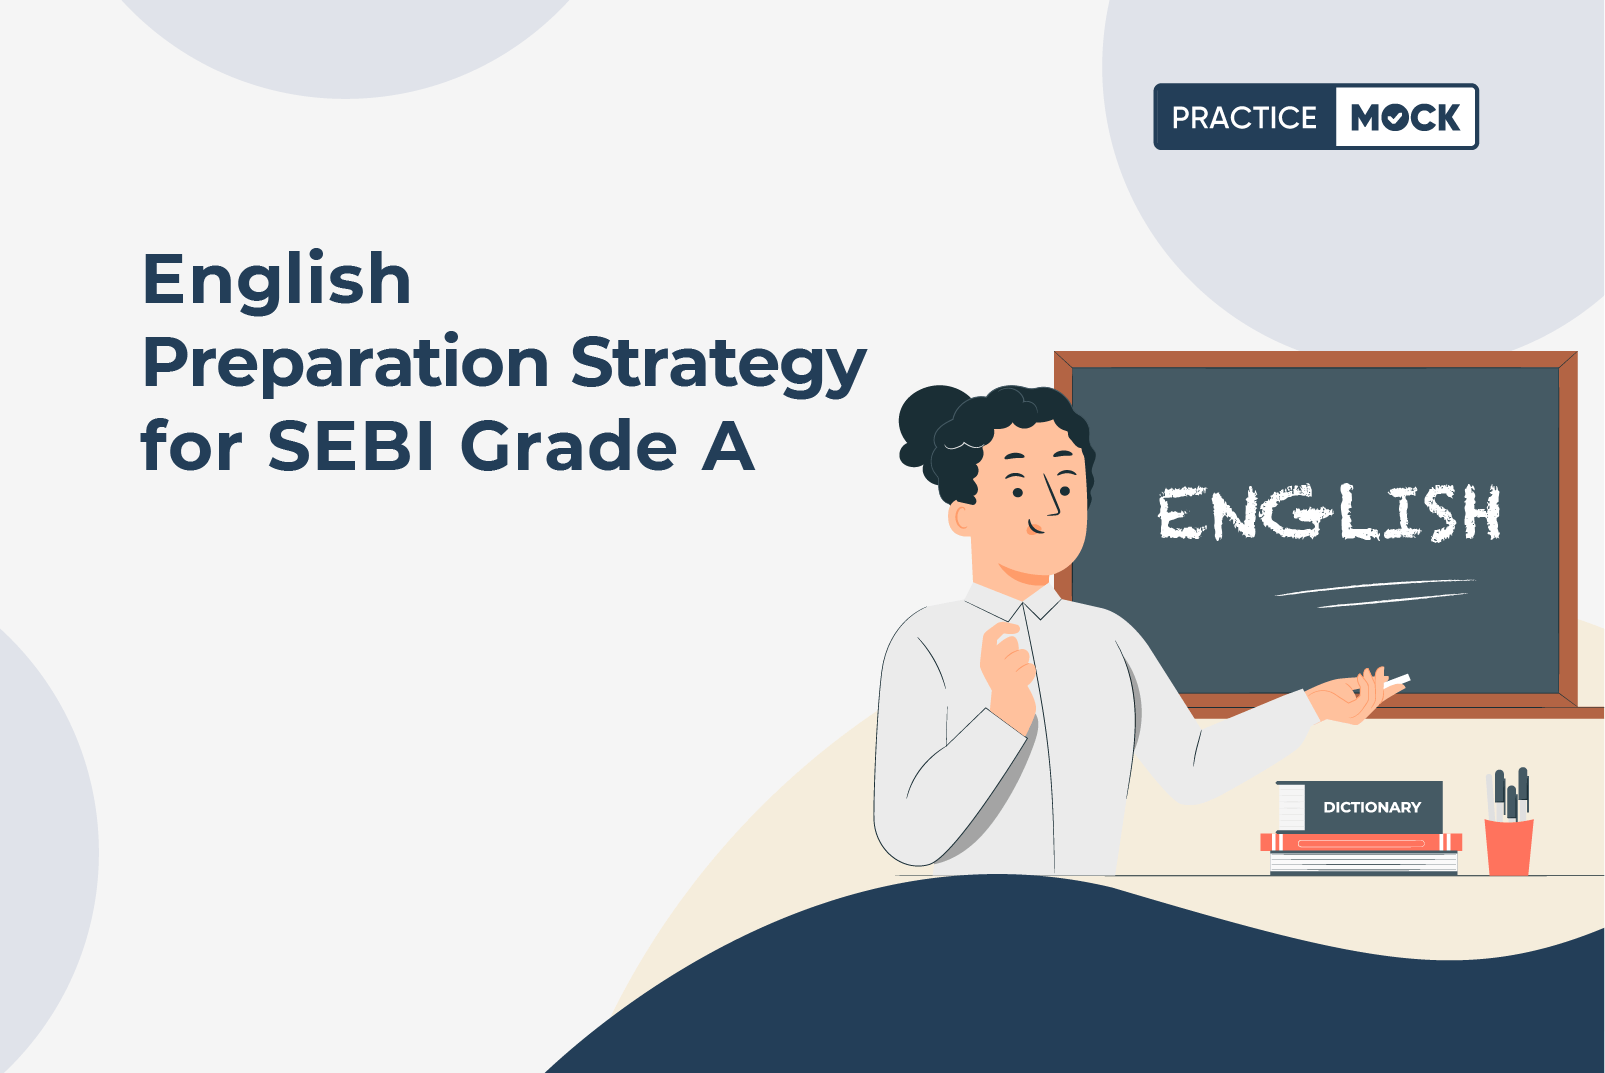 English Preparation Strategy for SEBI Grade A